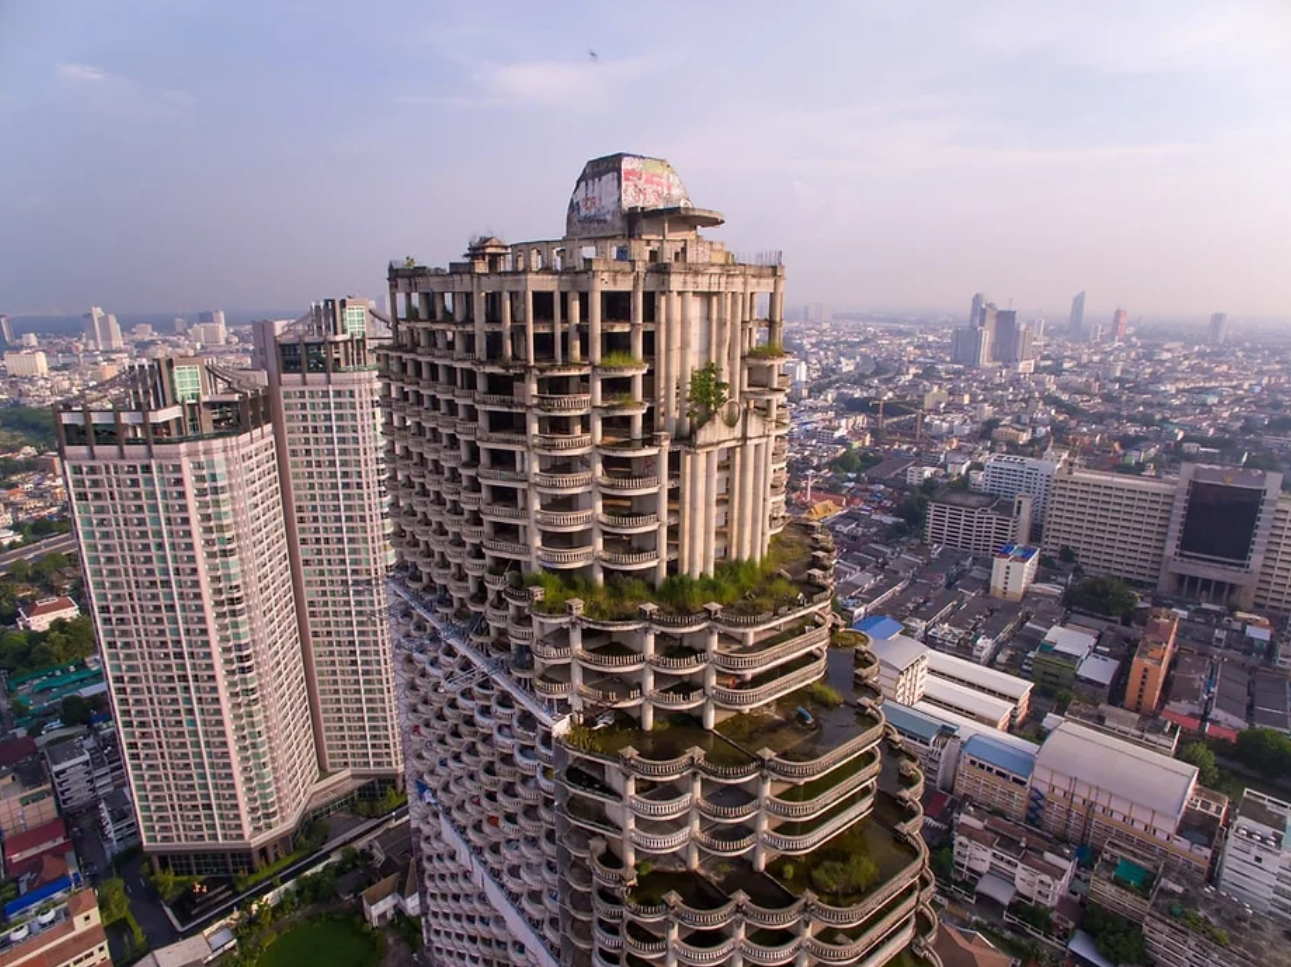 Bangkok's “Ghost Tower”